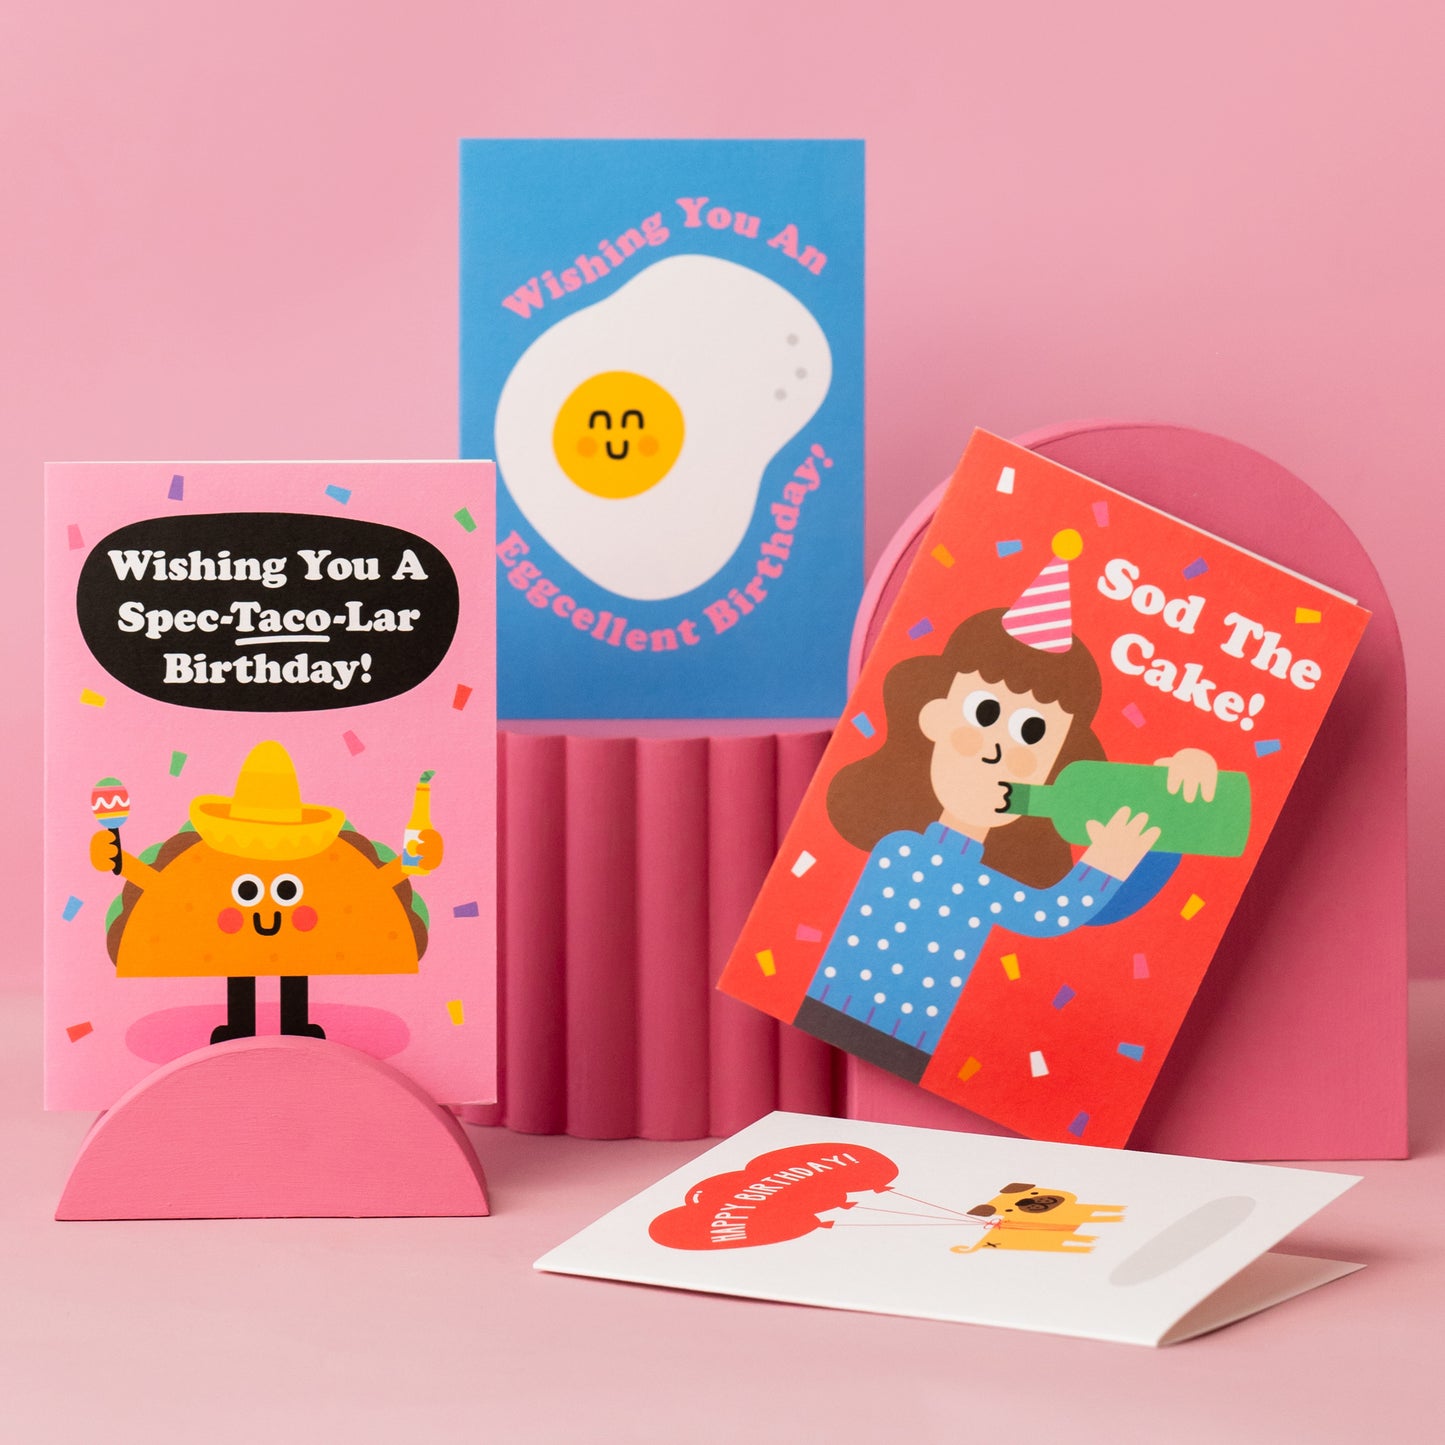 Hap-Pee Dog Birthday Card